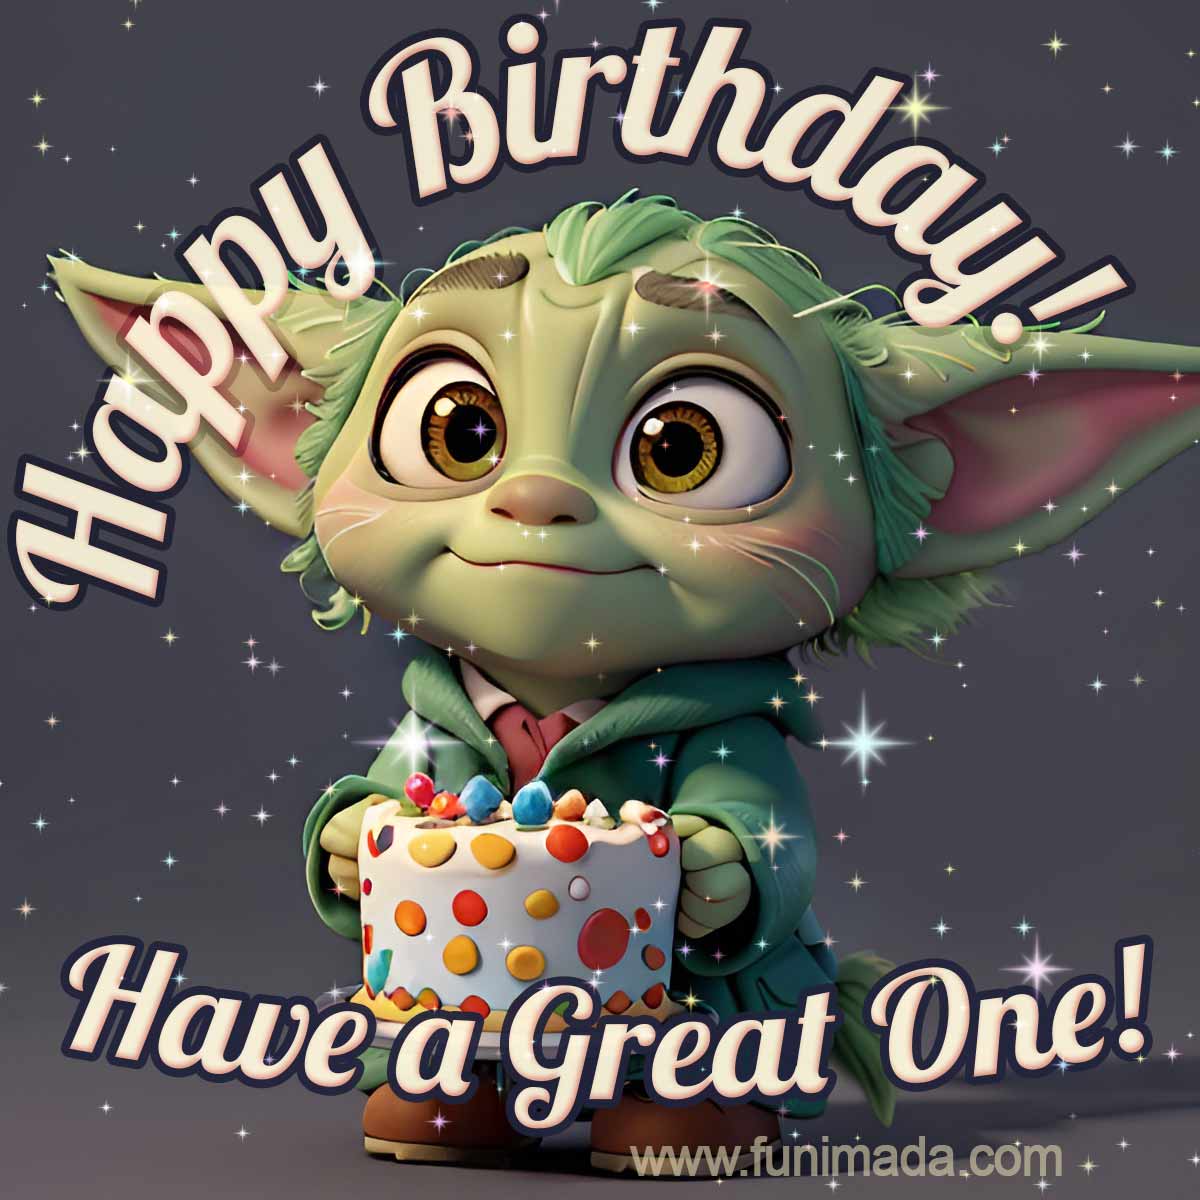 Baby Yoda wishes you a very happy birthday!